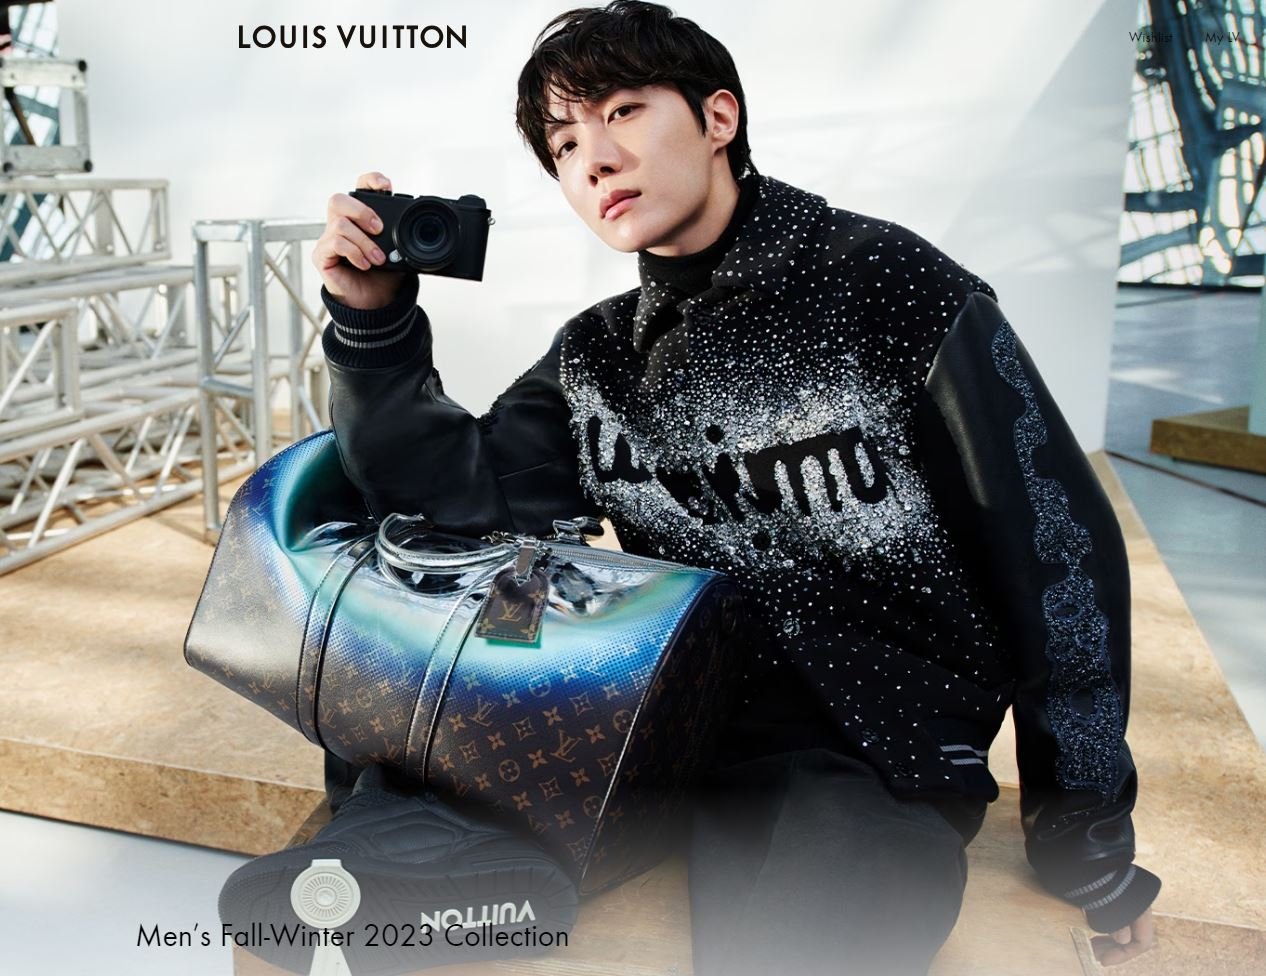 BTS Announced as Louis Vuitton Ambassadors: See Official Pic, Details